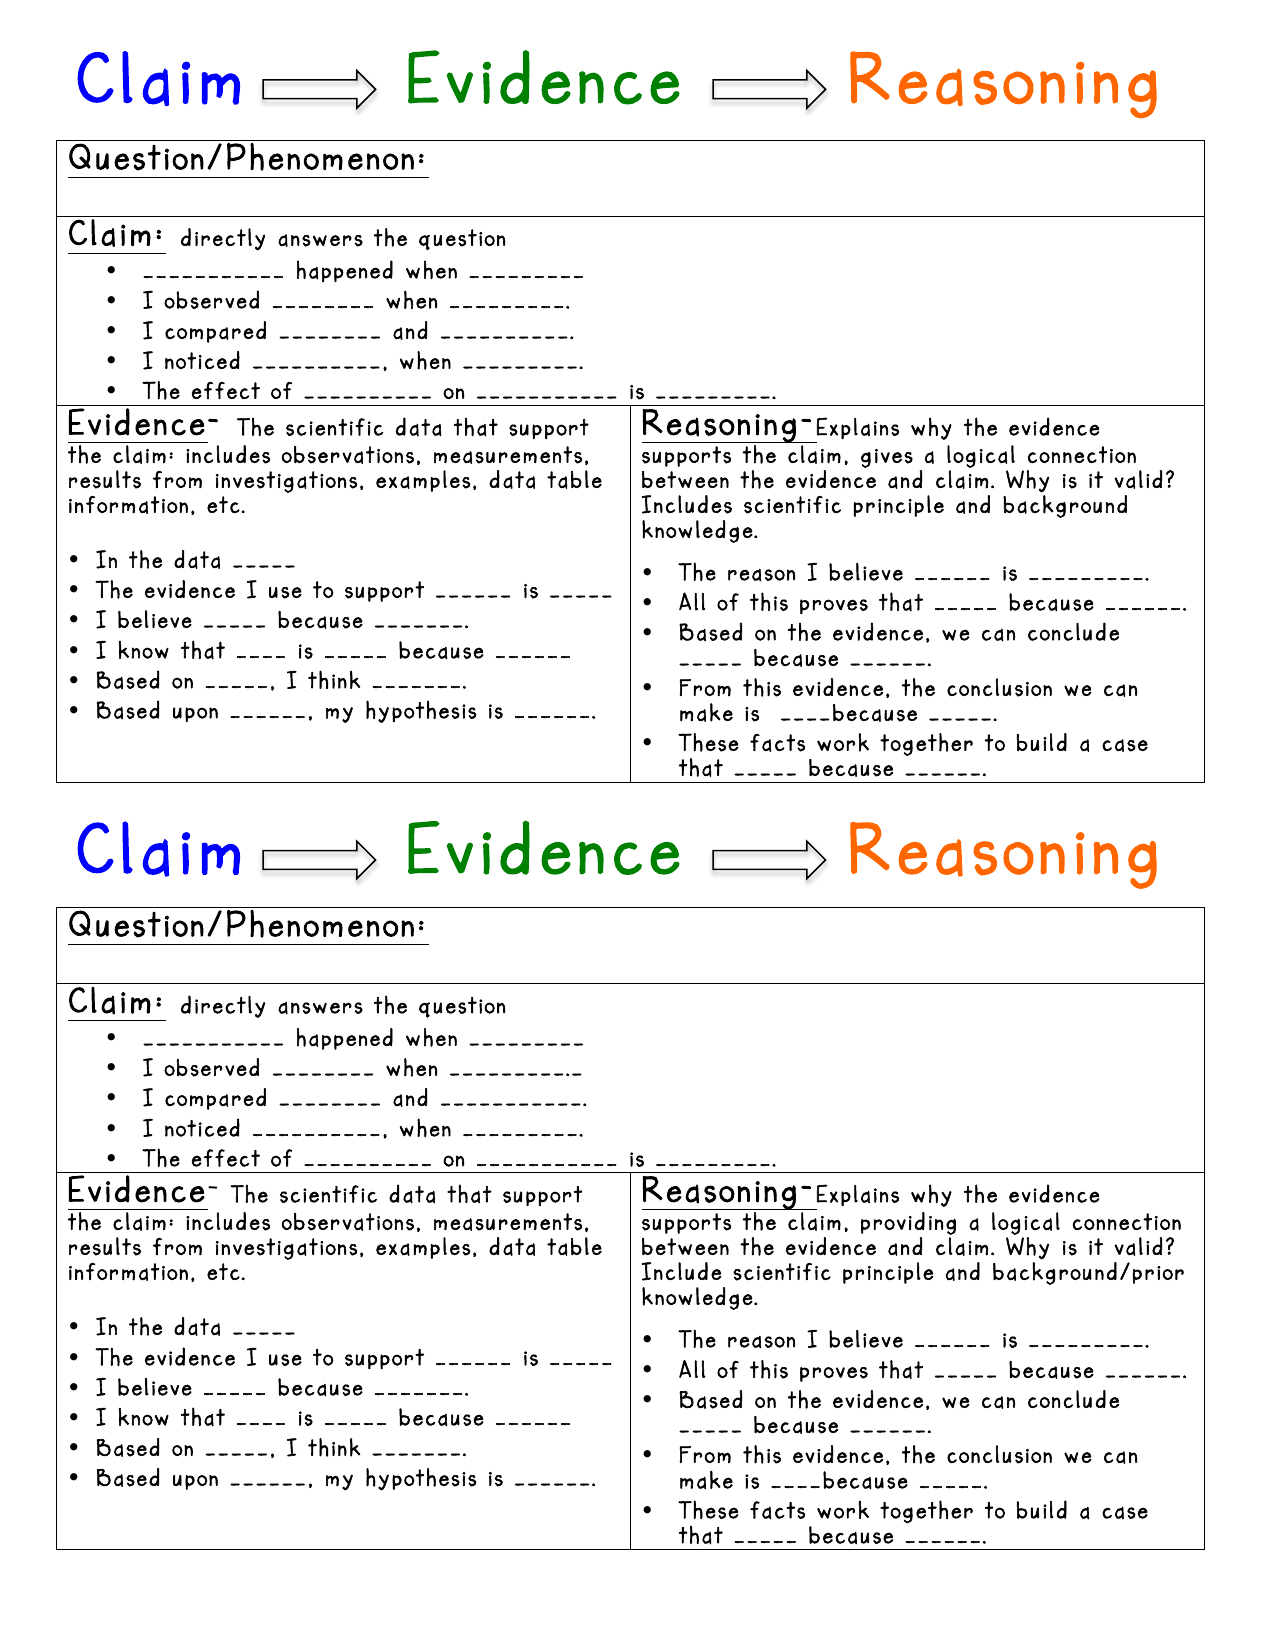 ClaimEvidenceReasoningStudentReferenceSheetNGSS Throughout Claim Evidence Reasoning Science Worksheet